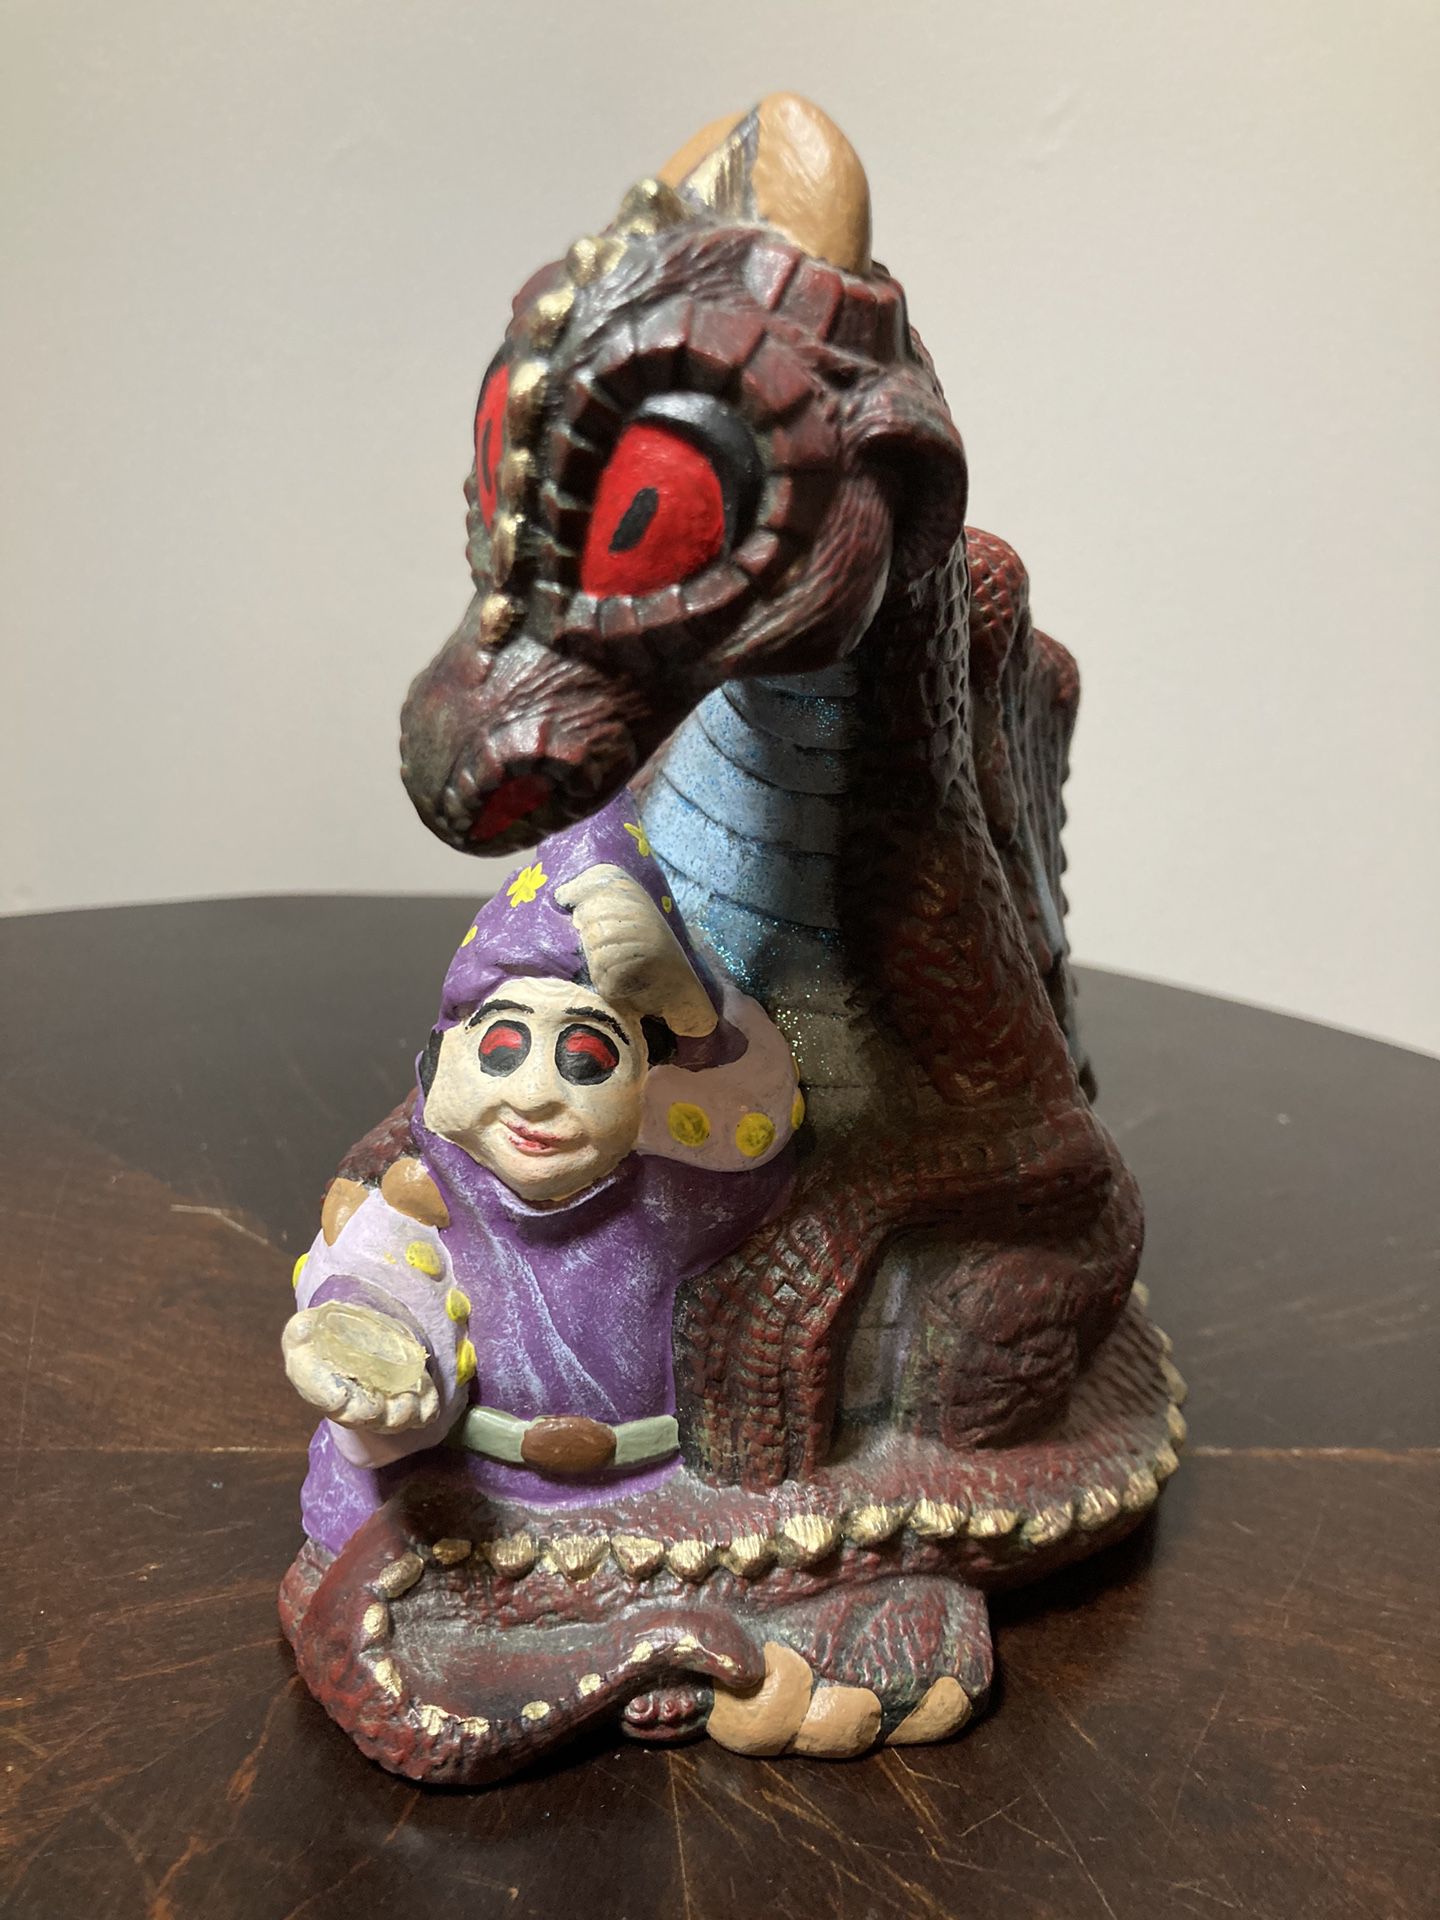 Vintage Handmade Ceramic Dragon & Wizard Figurine